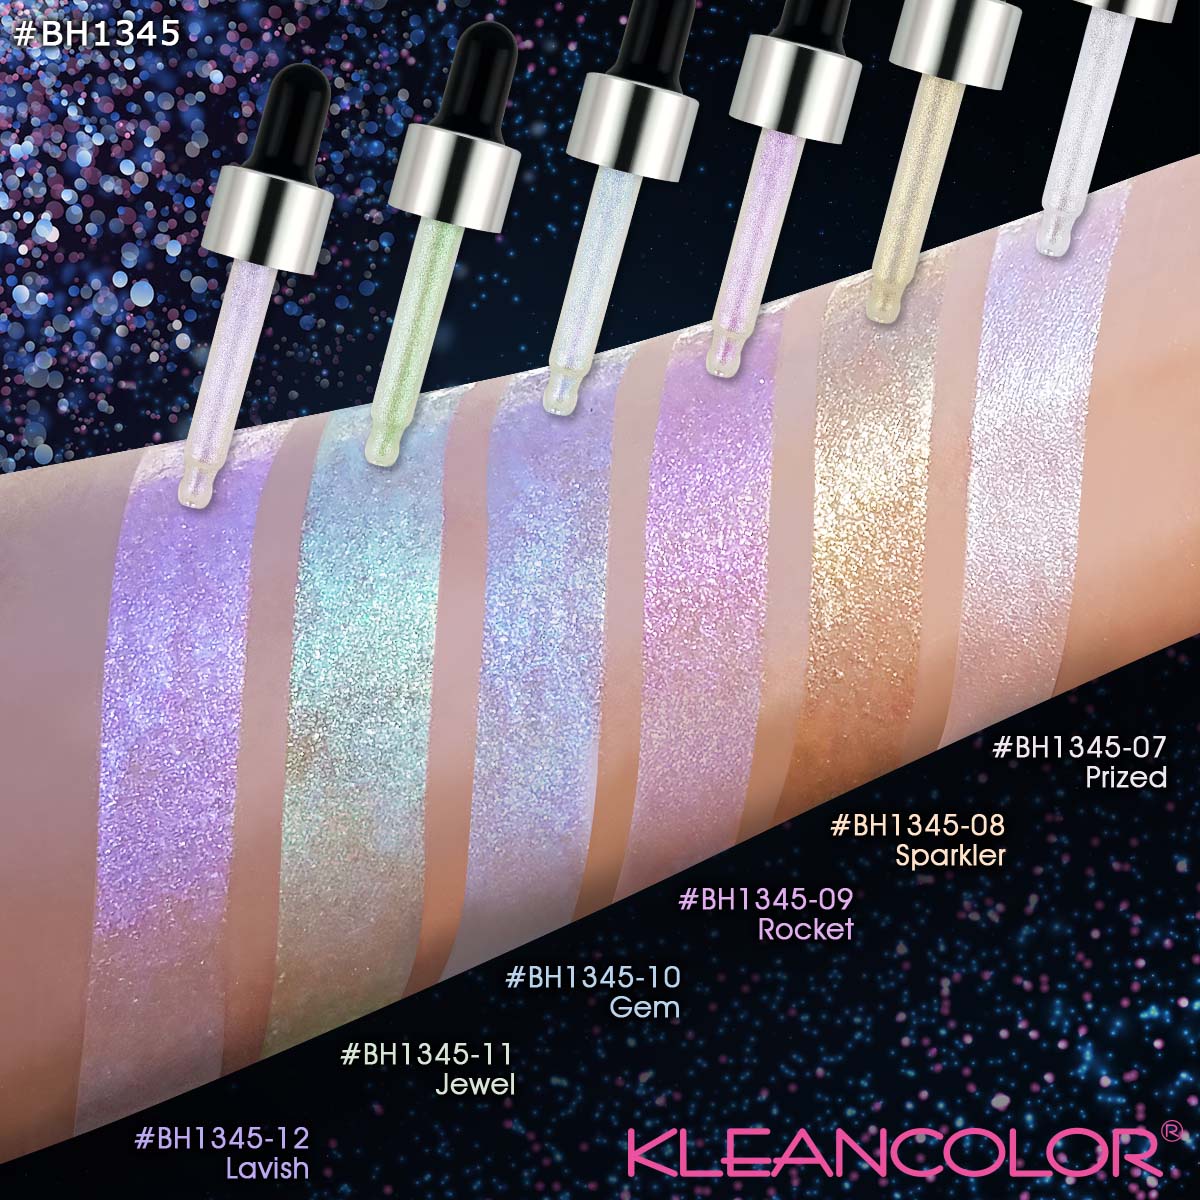 Kleancolor - Beam Boost Liquid Glitter Drops Jewel